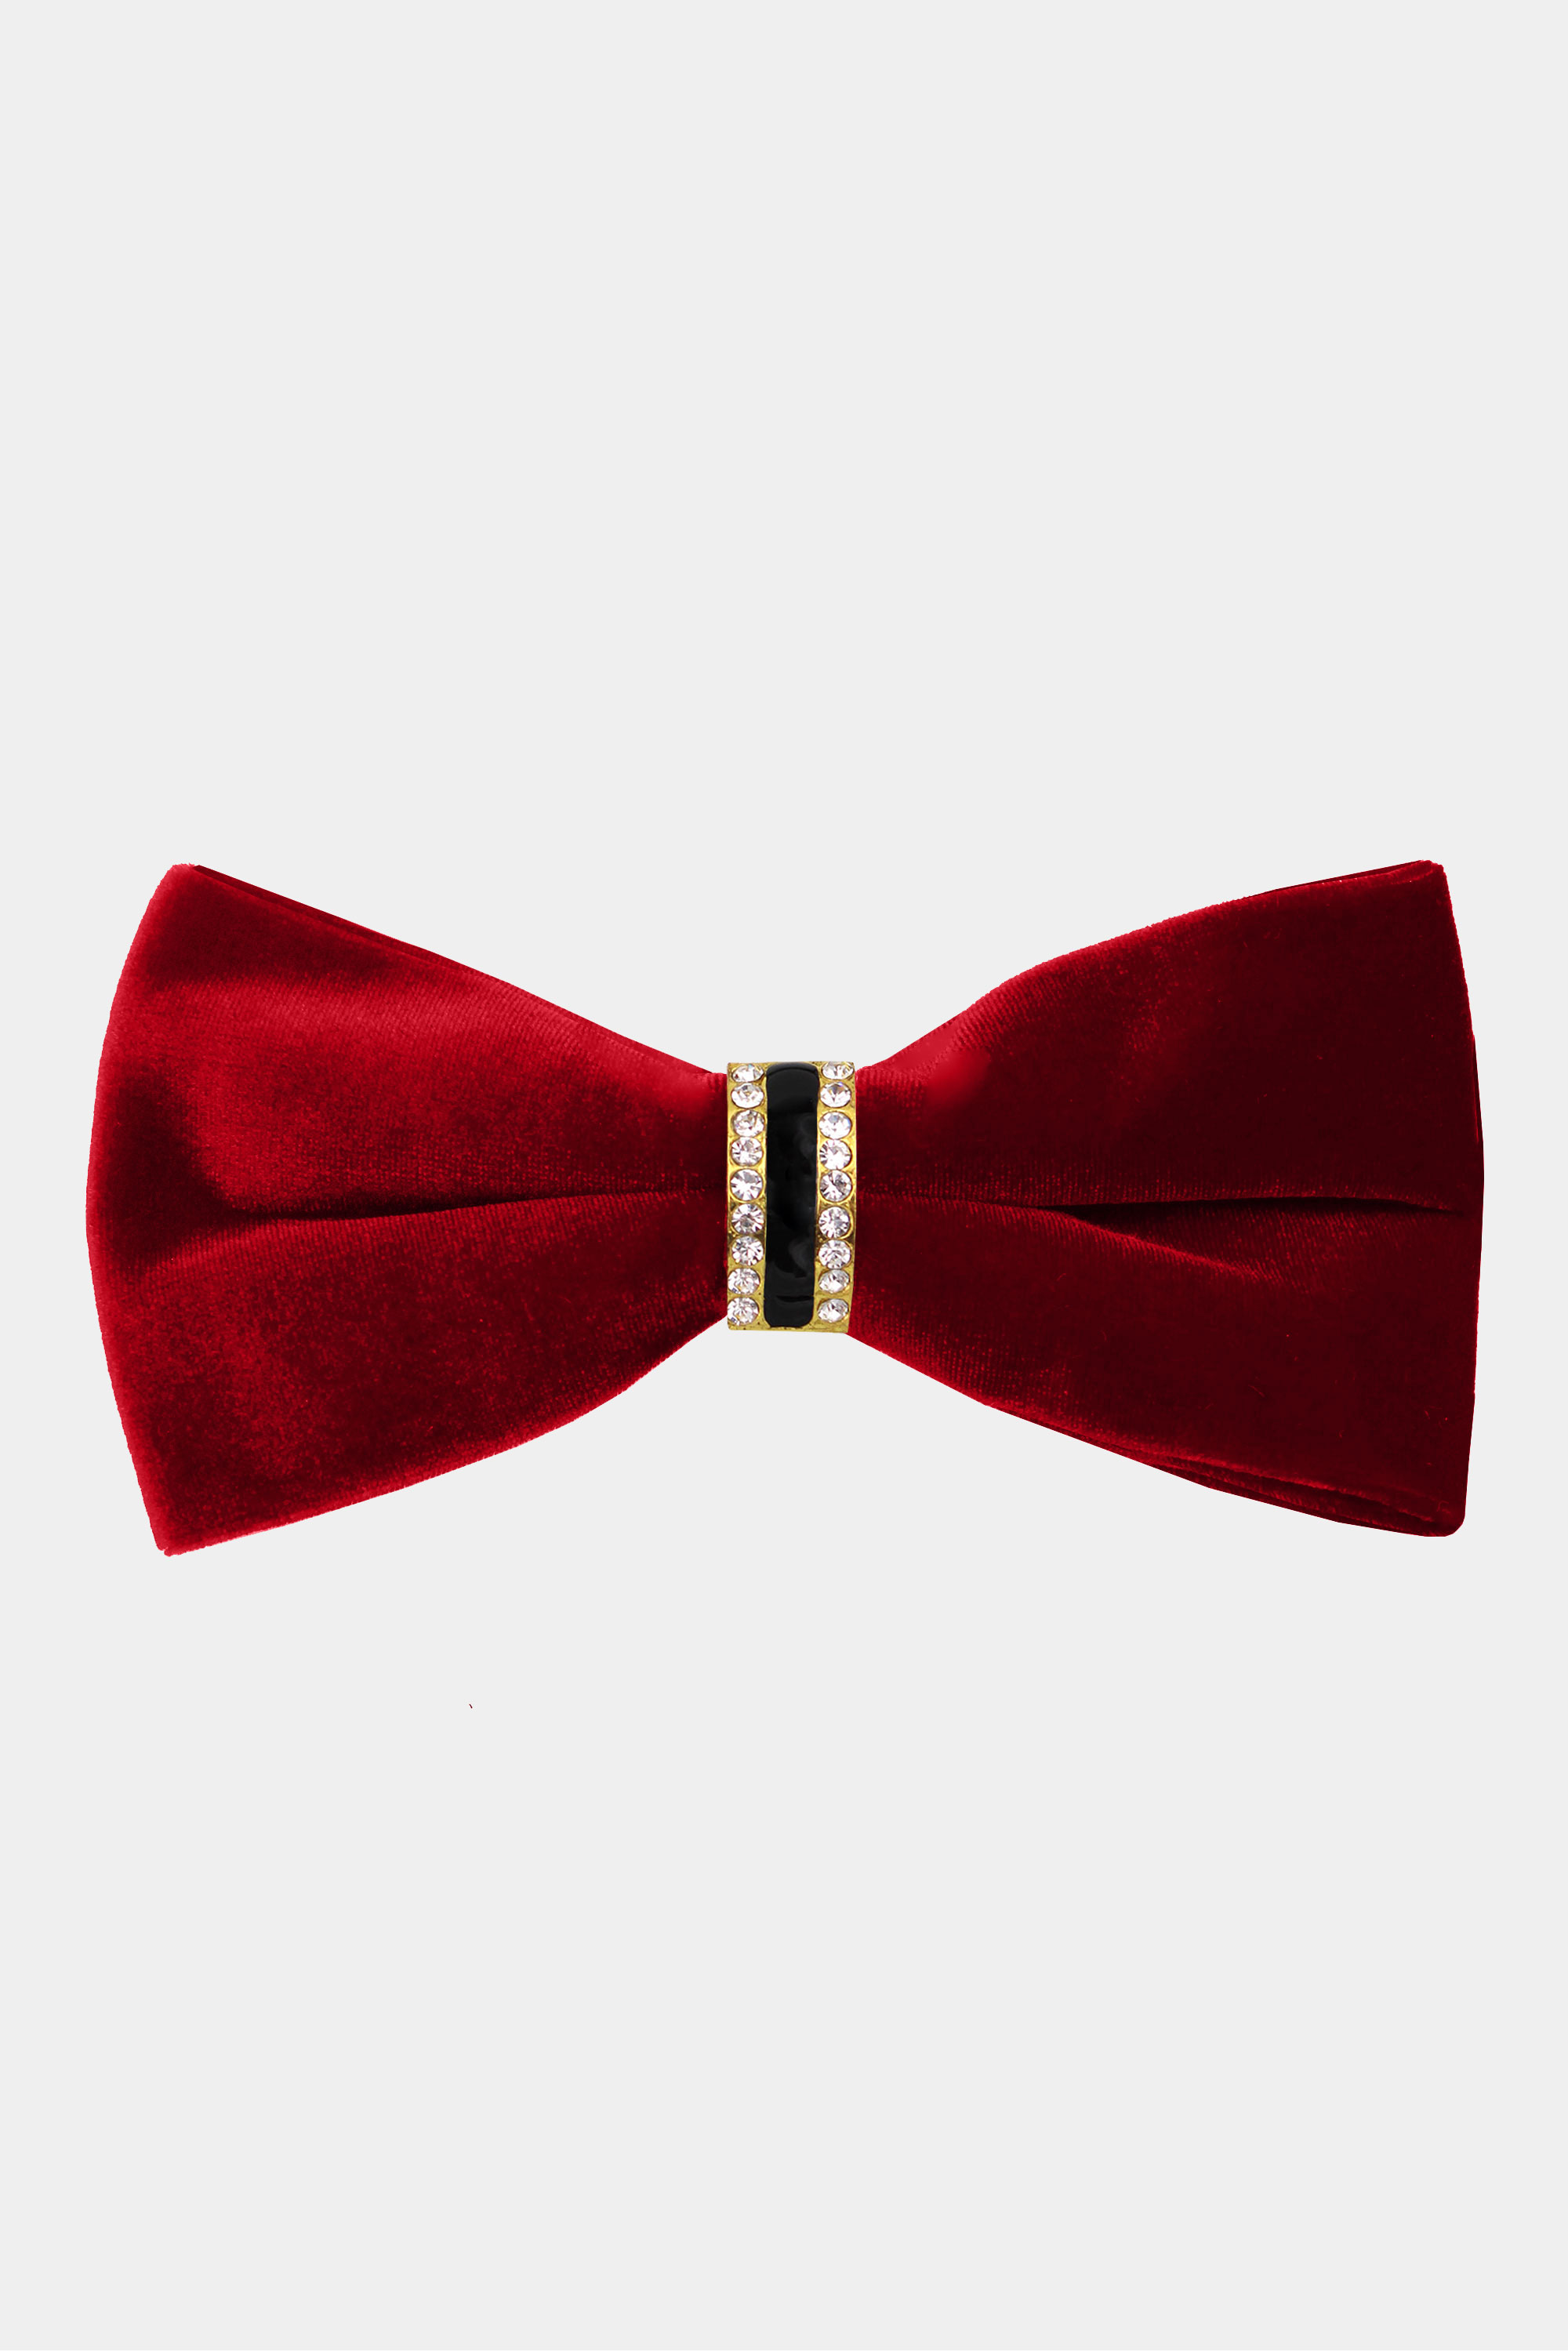 Mens-Red-Velvet-Bow-Tie-Crystal-Luxury-Fancy-Bowtie-from-Gentlemansguru.com